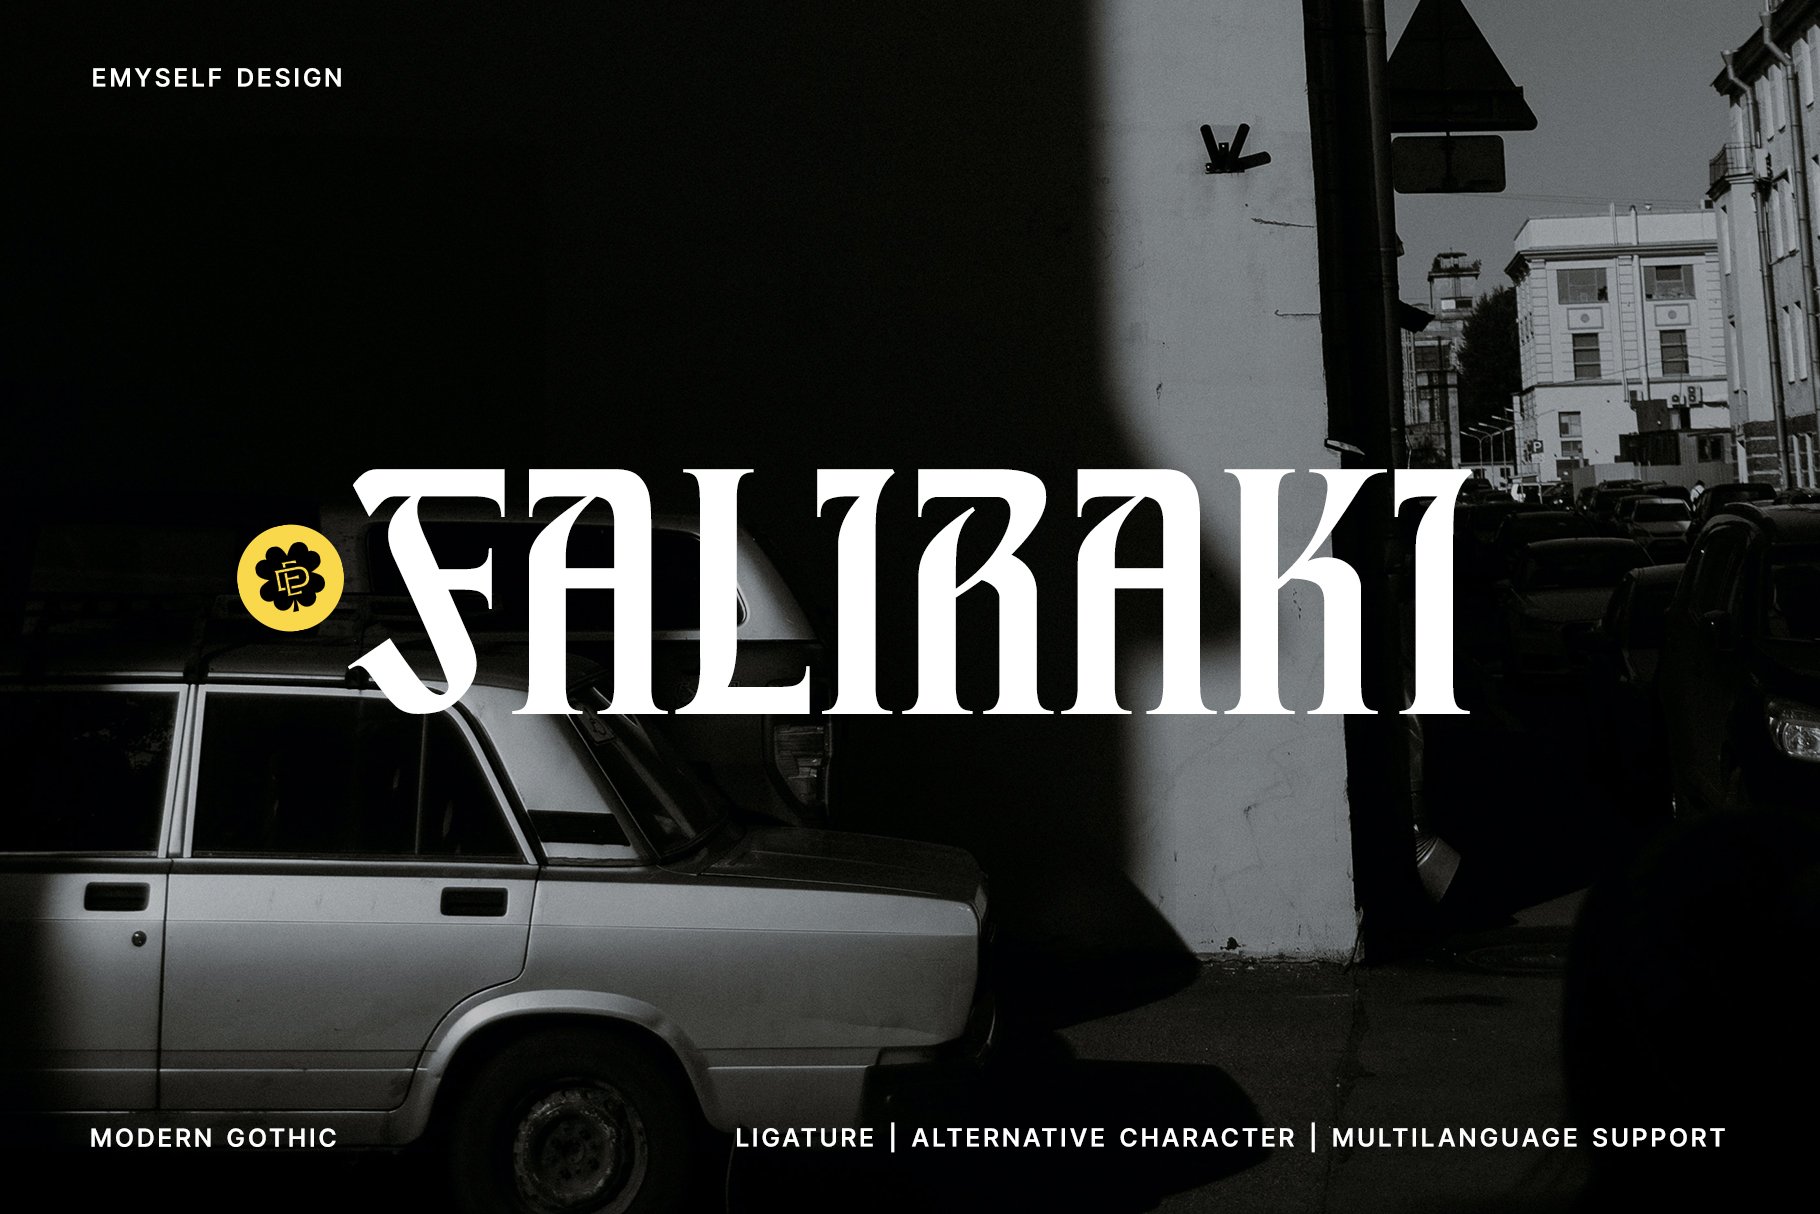 ED Faliraki Typeface cover image.